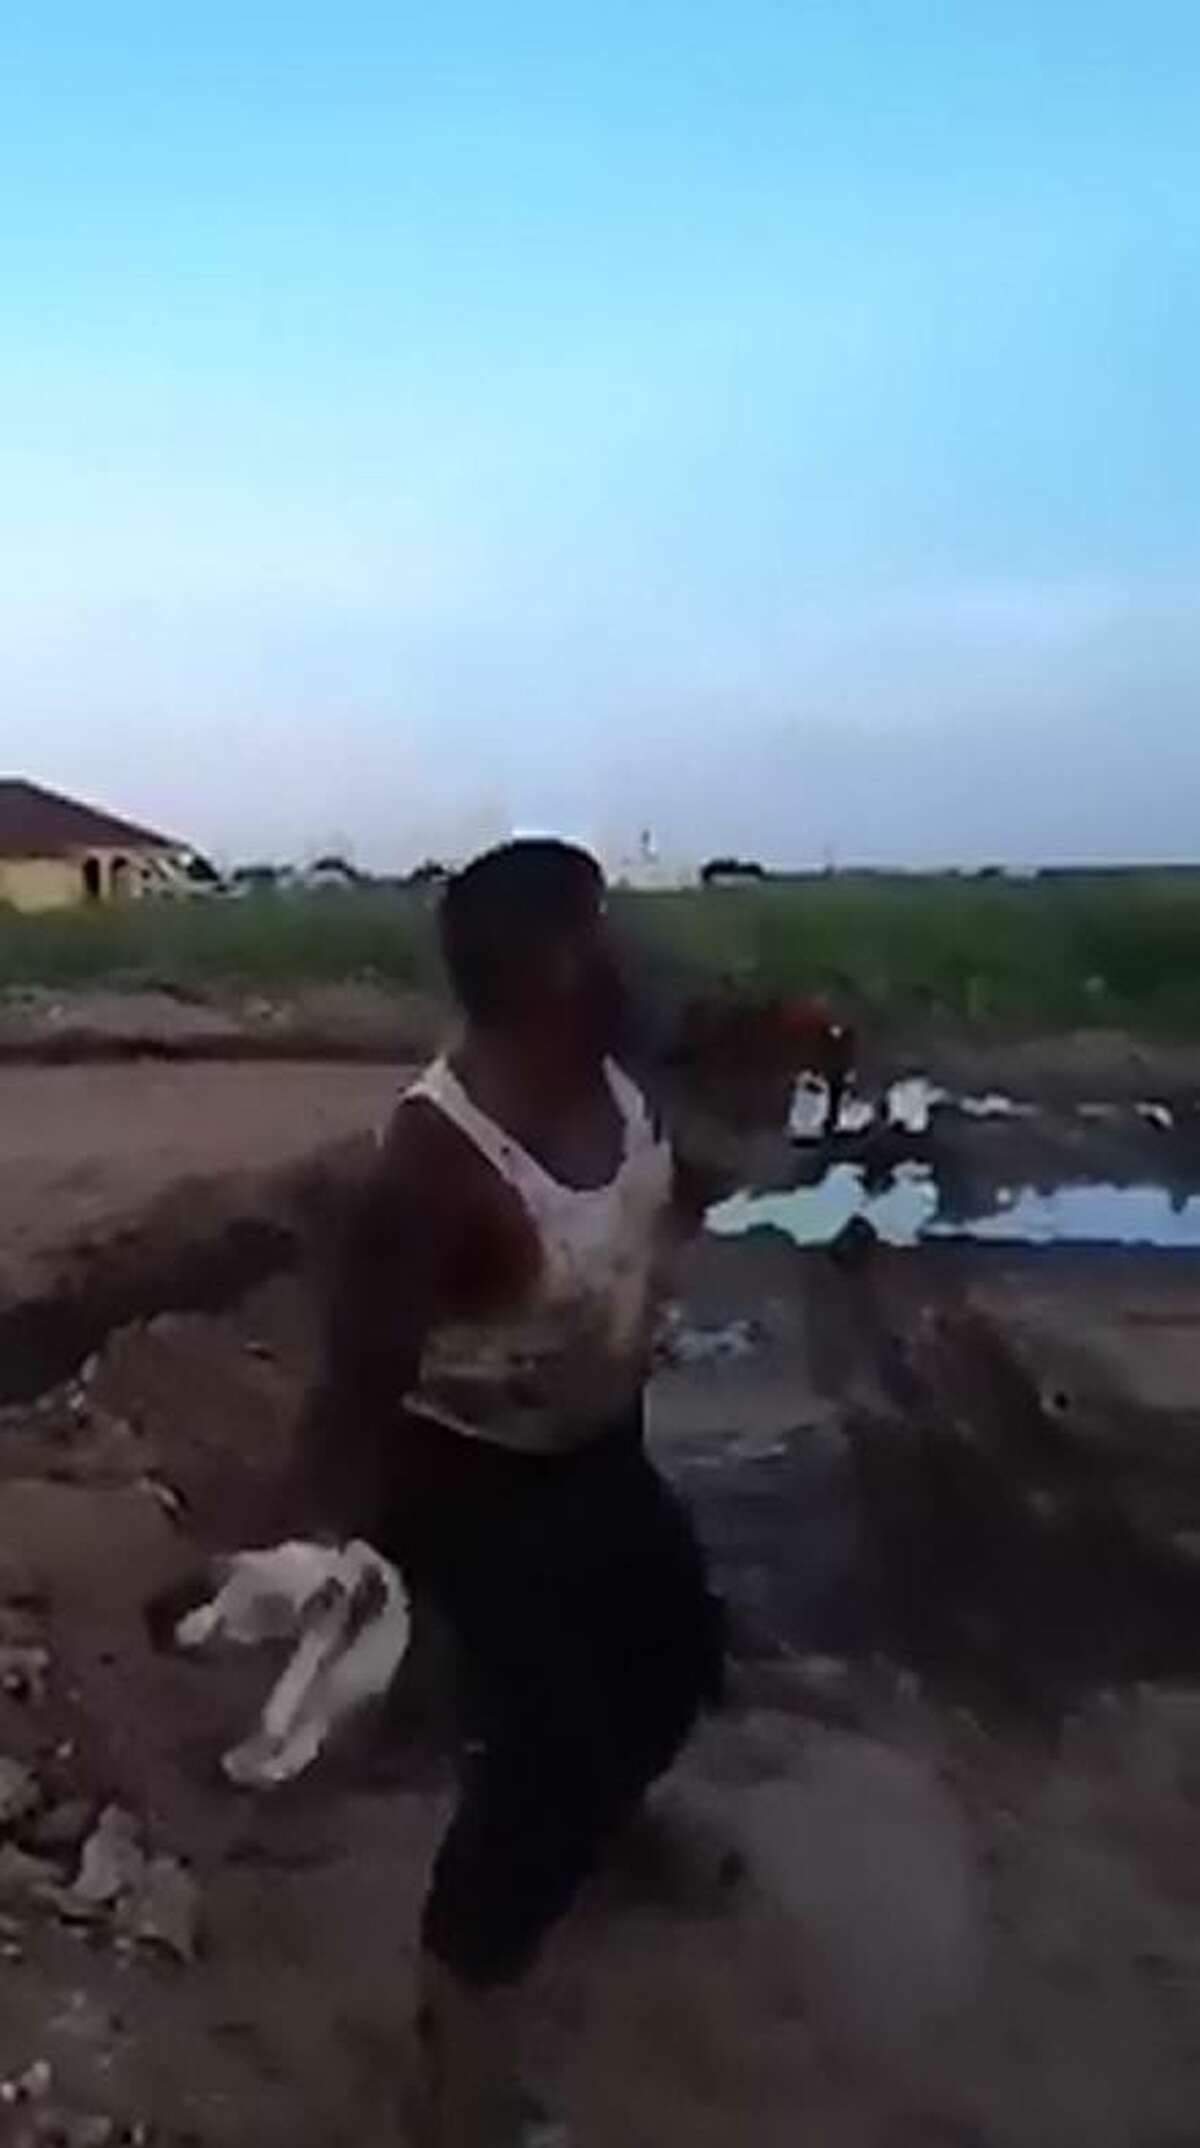 Screengrabs from a video posted online show an Odessa man flinging a small kitten across a field.